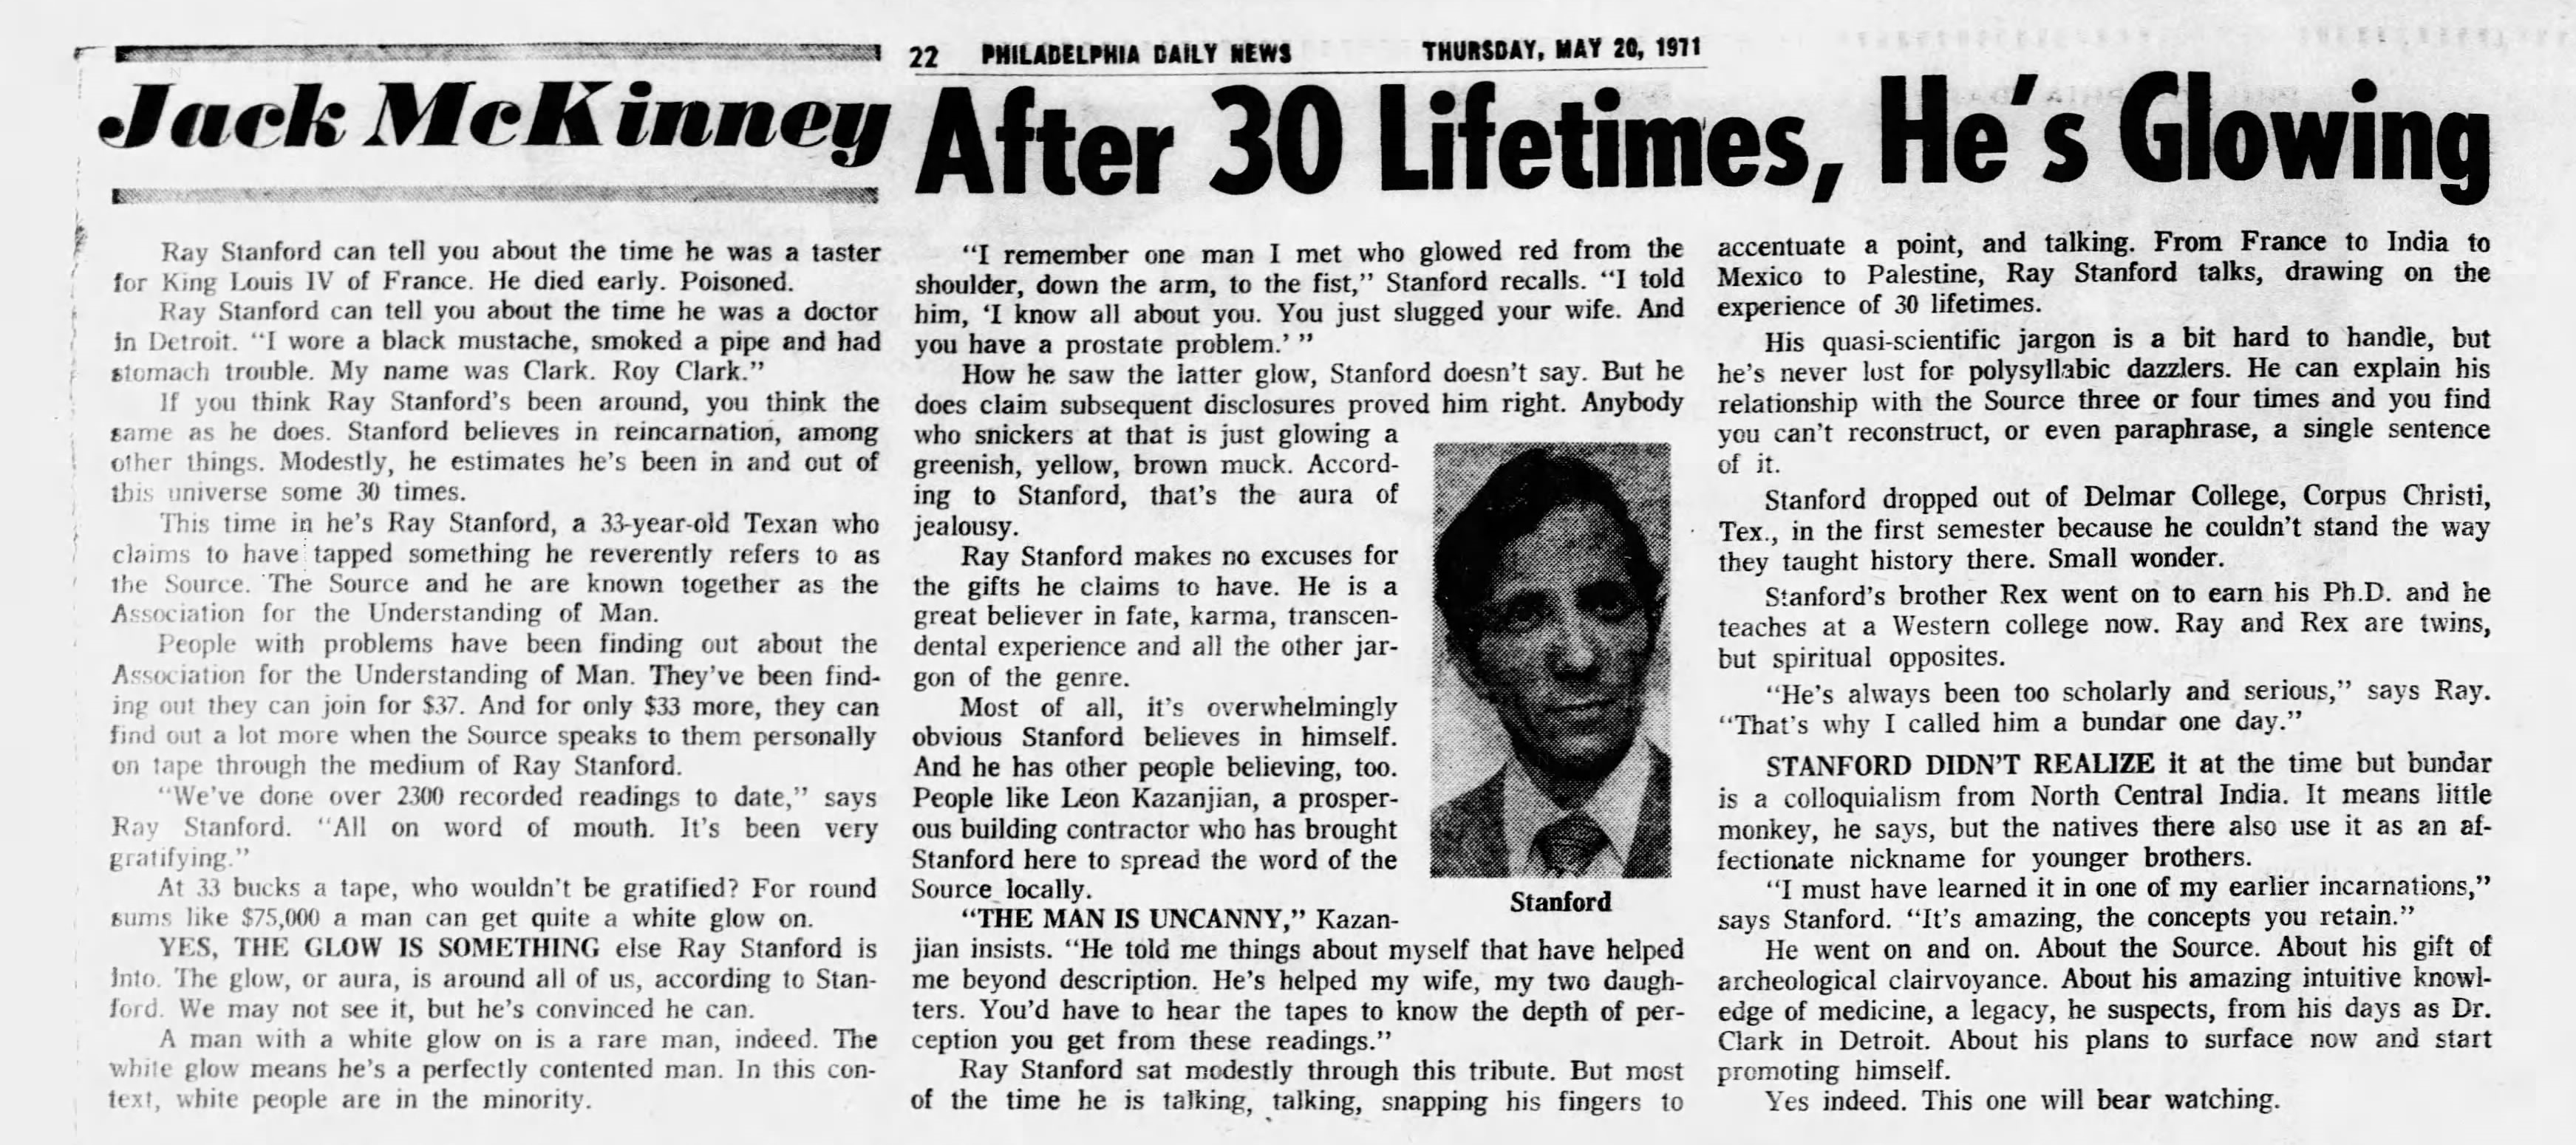 Philadelphia Daily News Ray Stanford Profile 5-20-1971